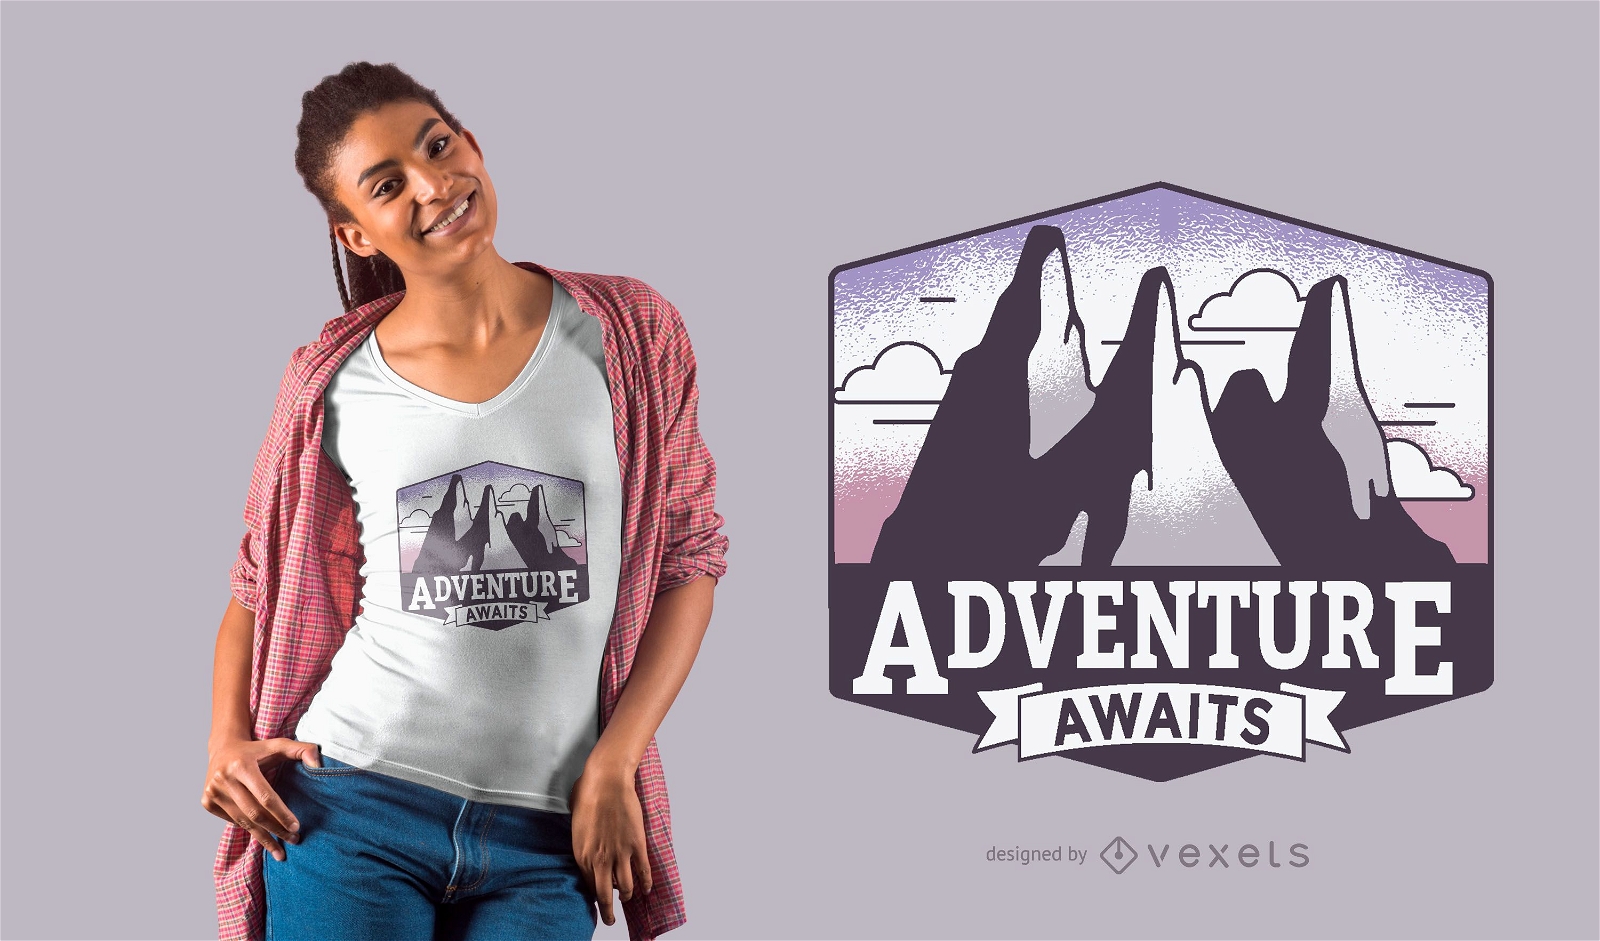 La aventura espera el dise?o de la camiseta.